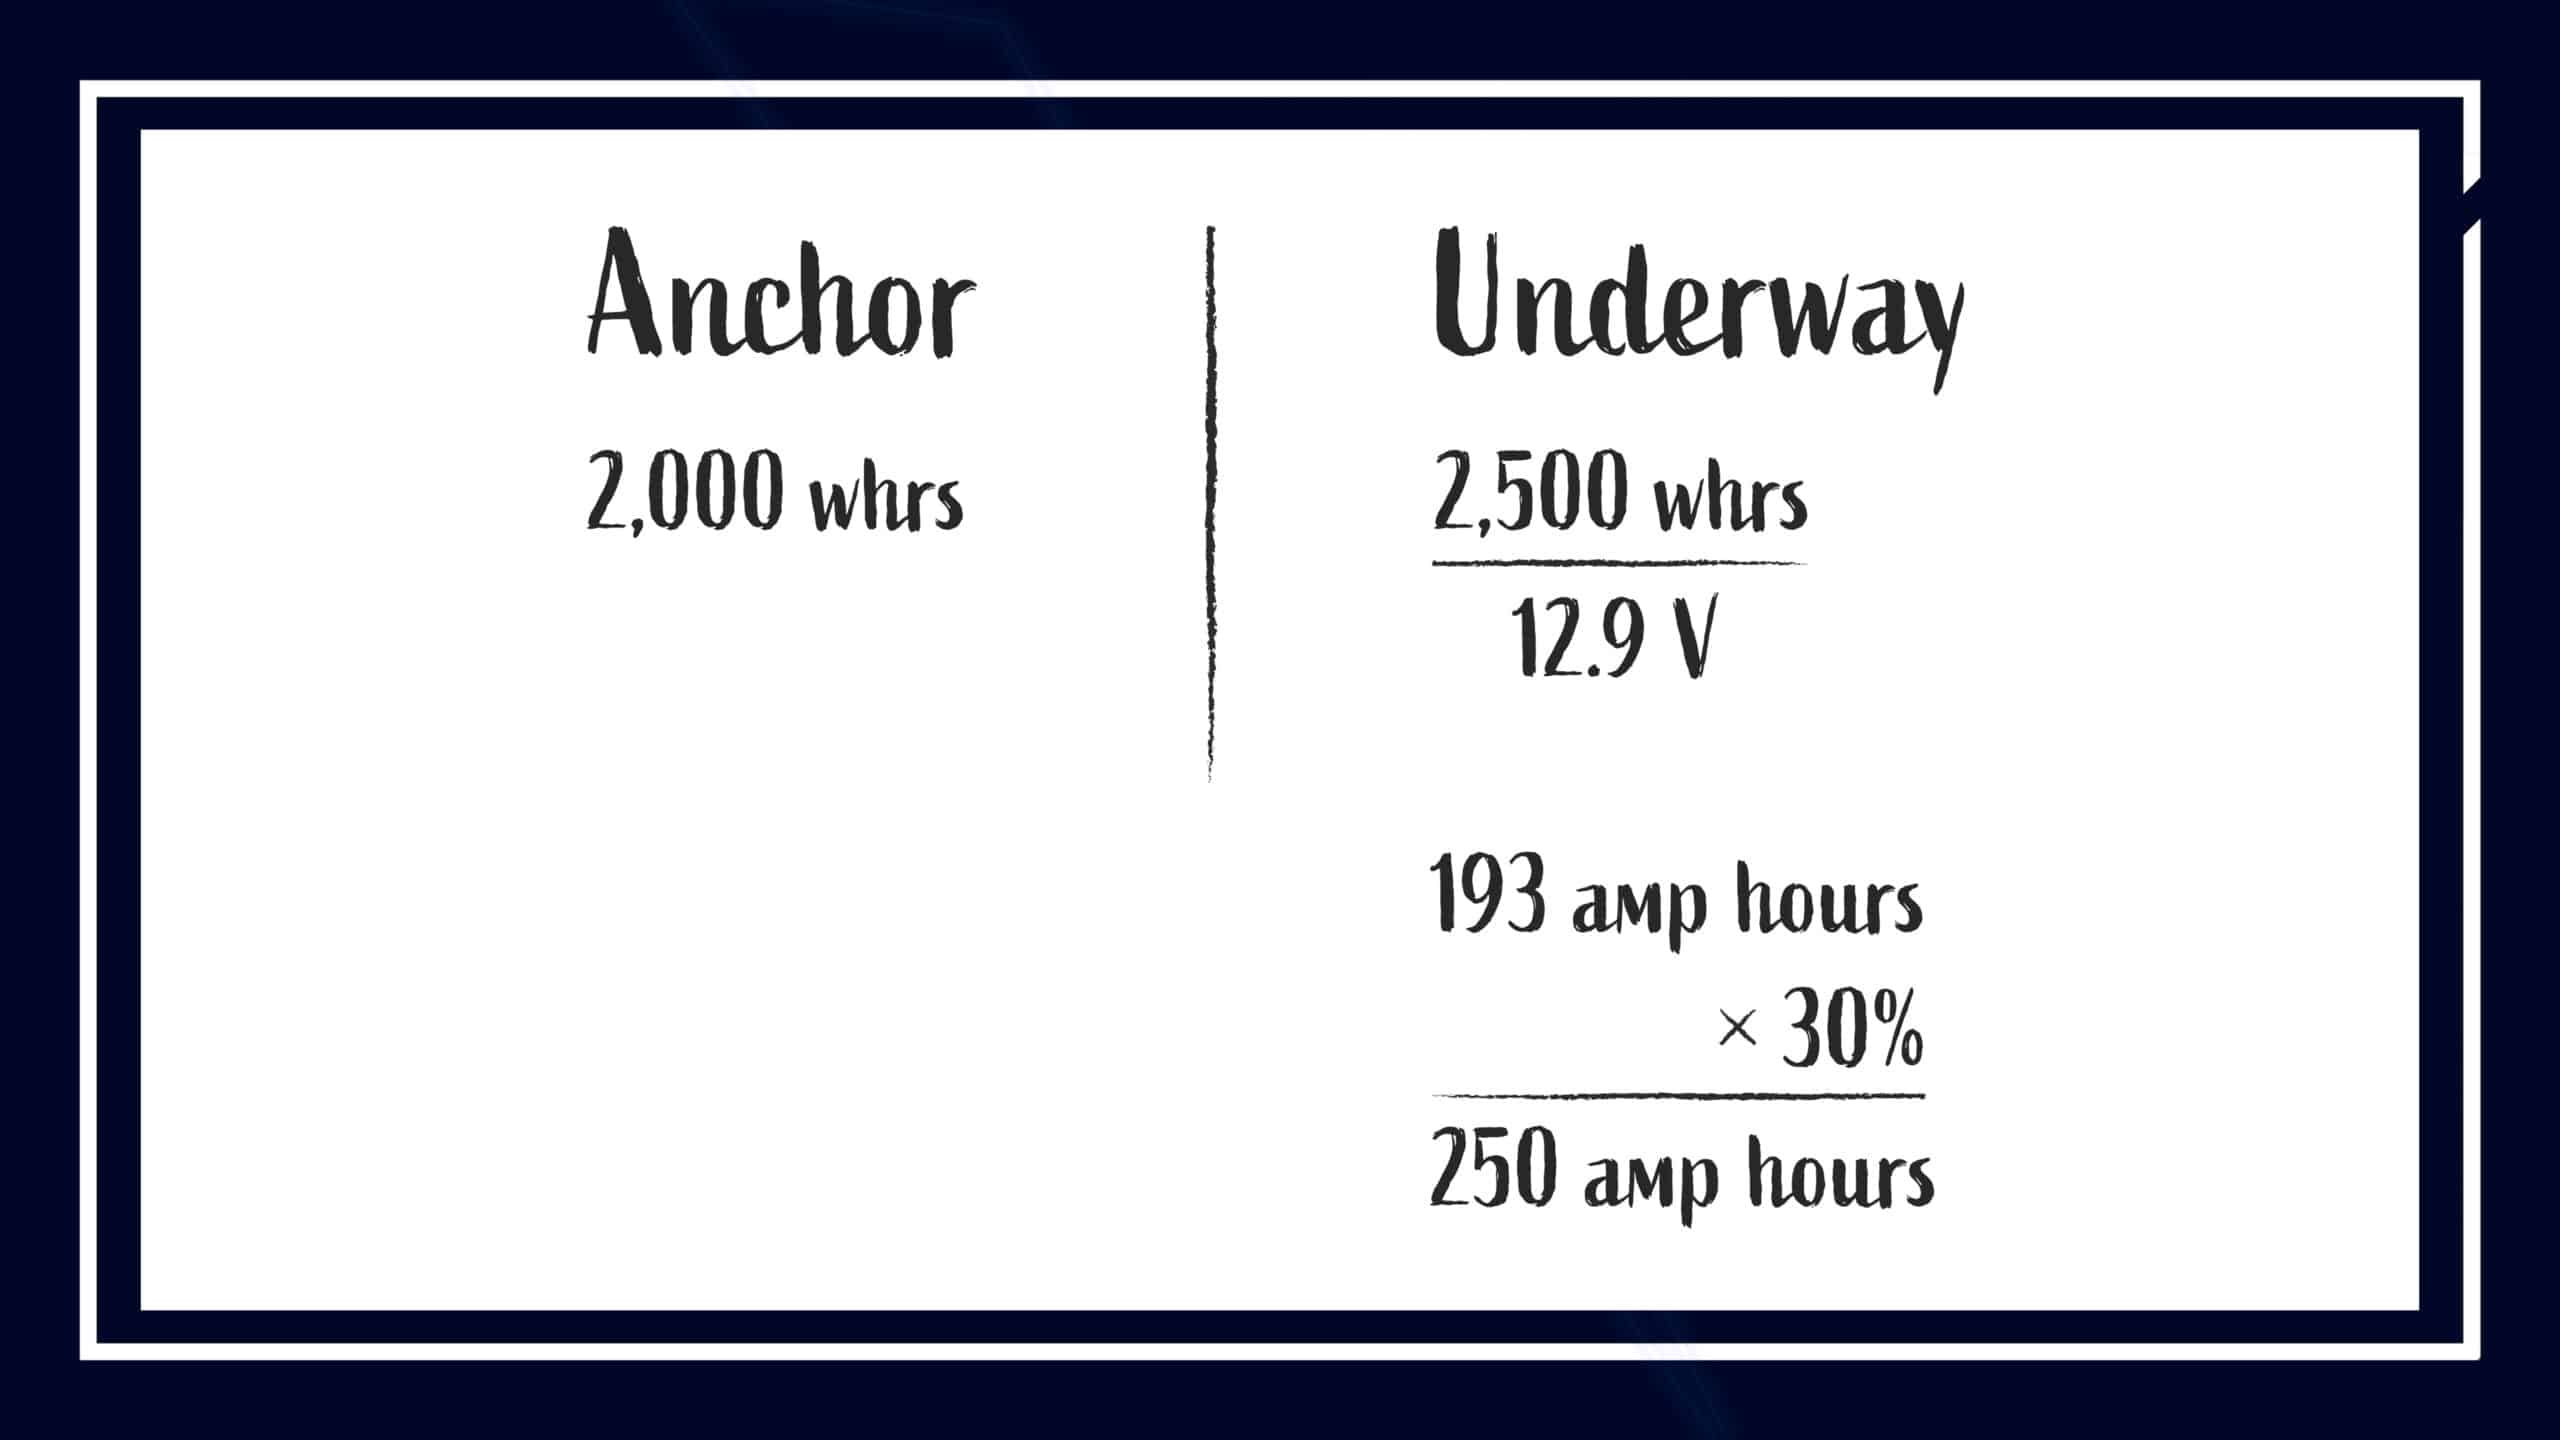 power audit comparison for a sailboat at anchor versus a sailboat undereway